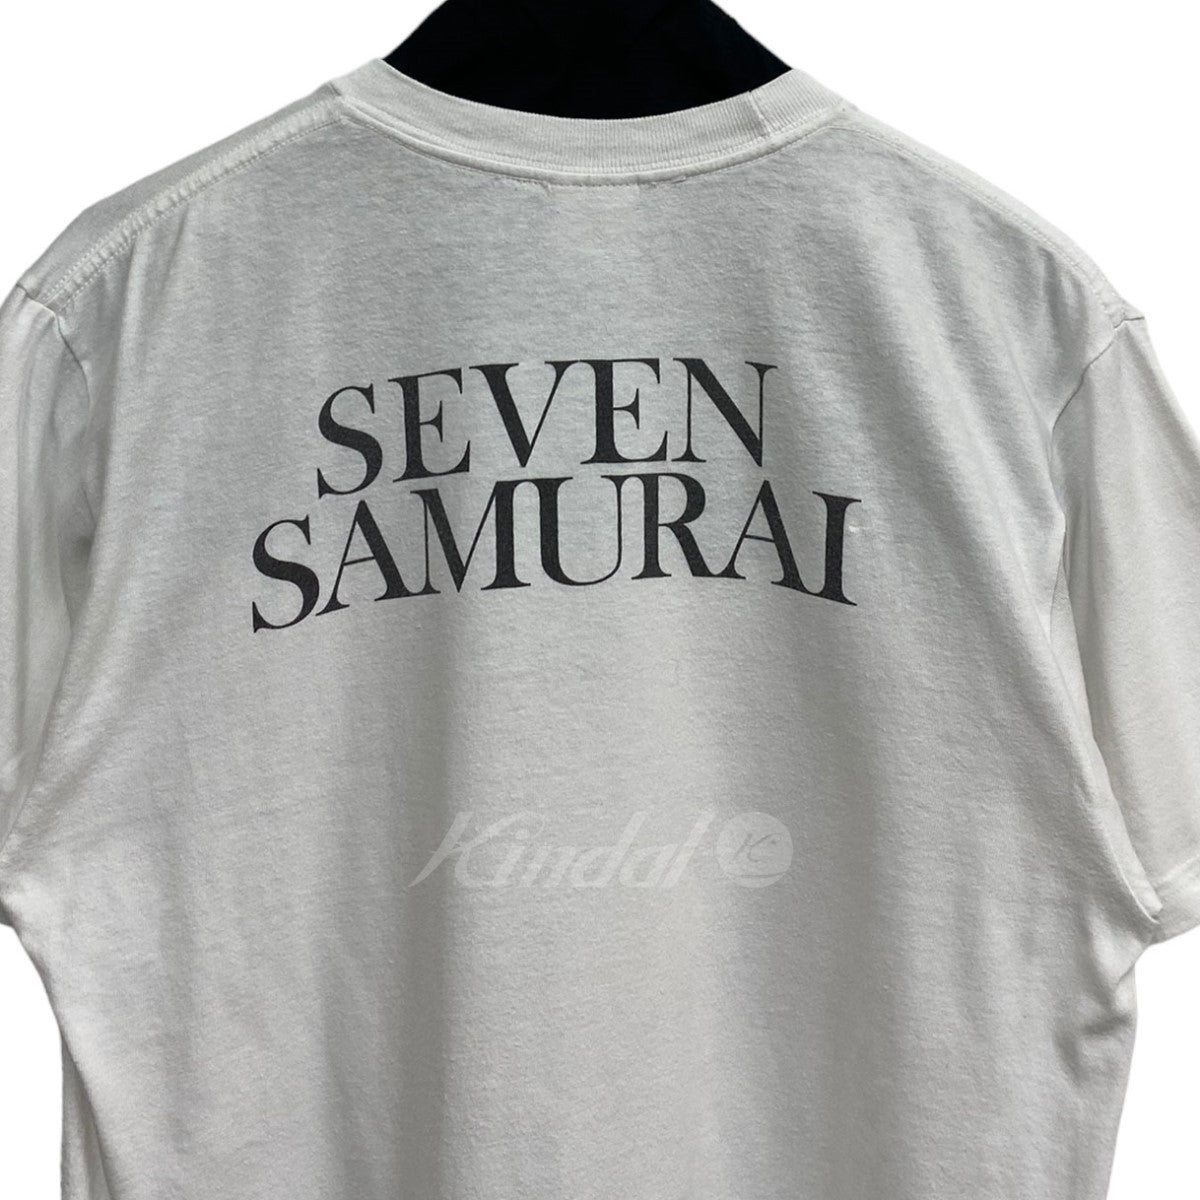 SUPREME×UNDERCOVER 16AW Seven Samurai Tee七人の侍プリントTシャツ ...